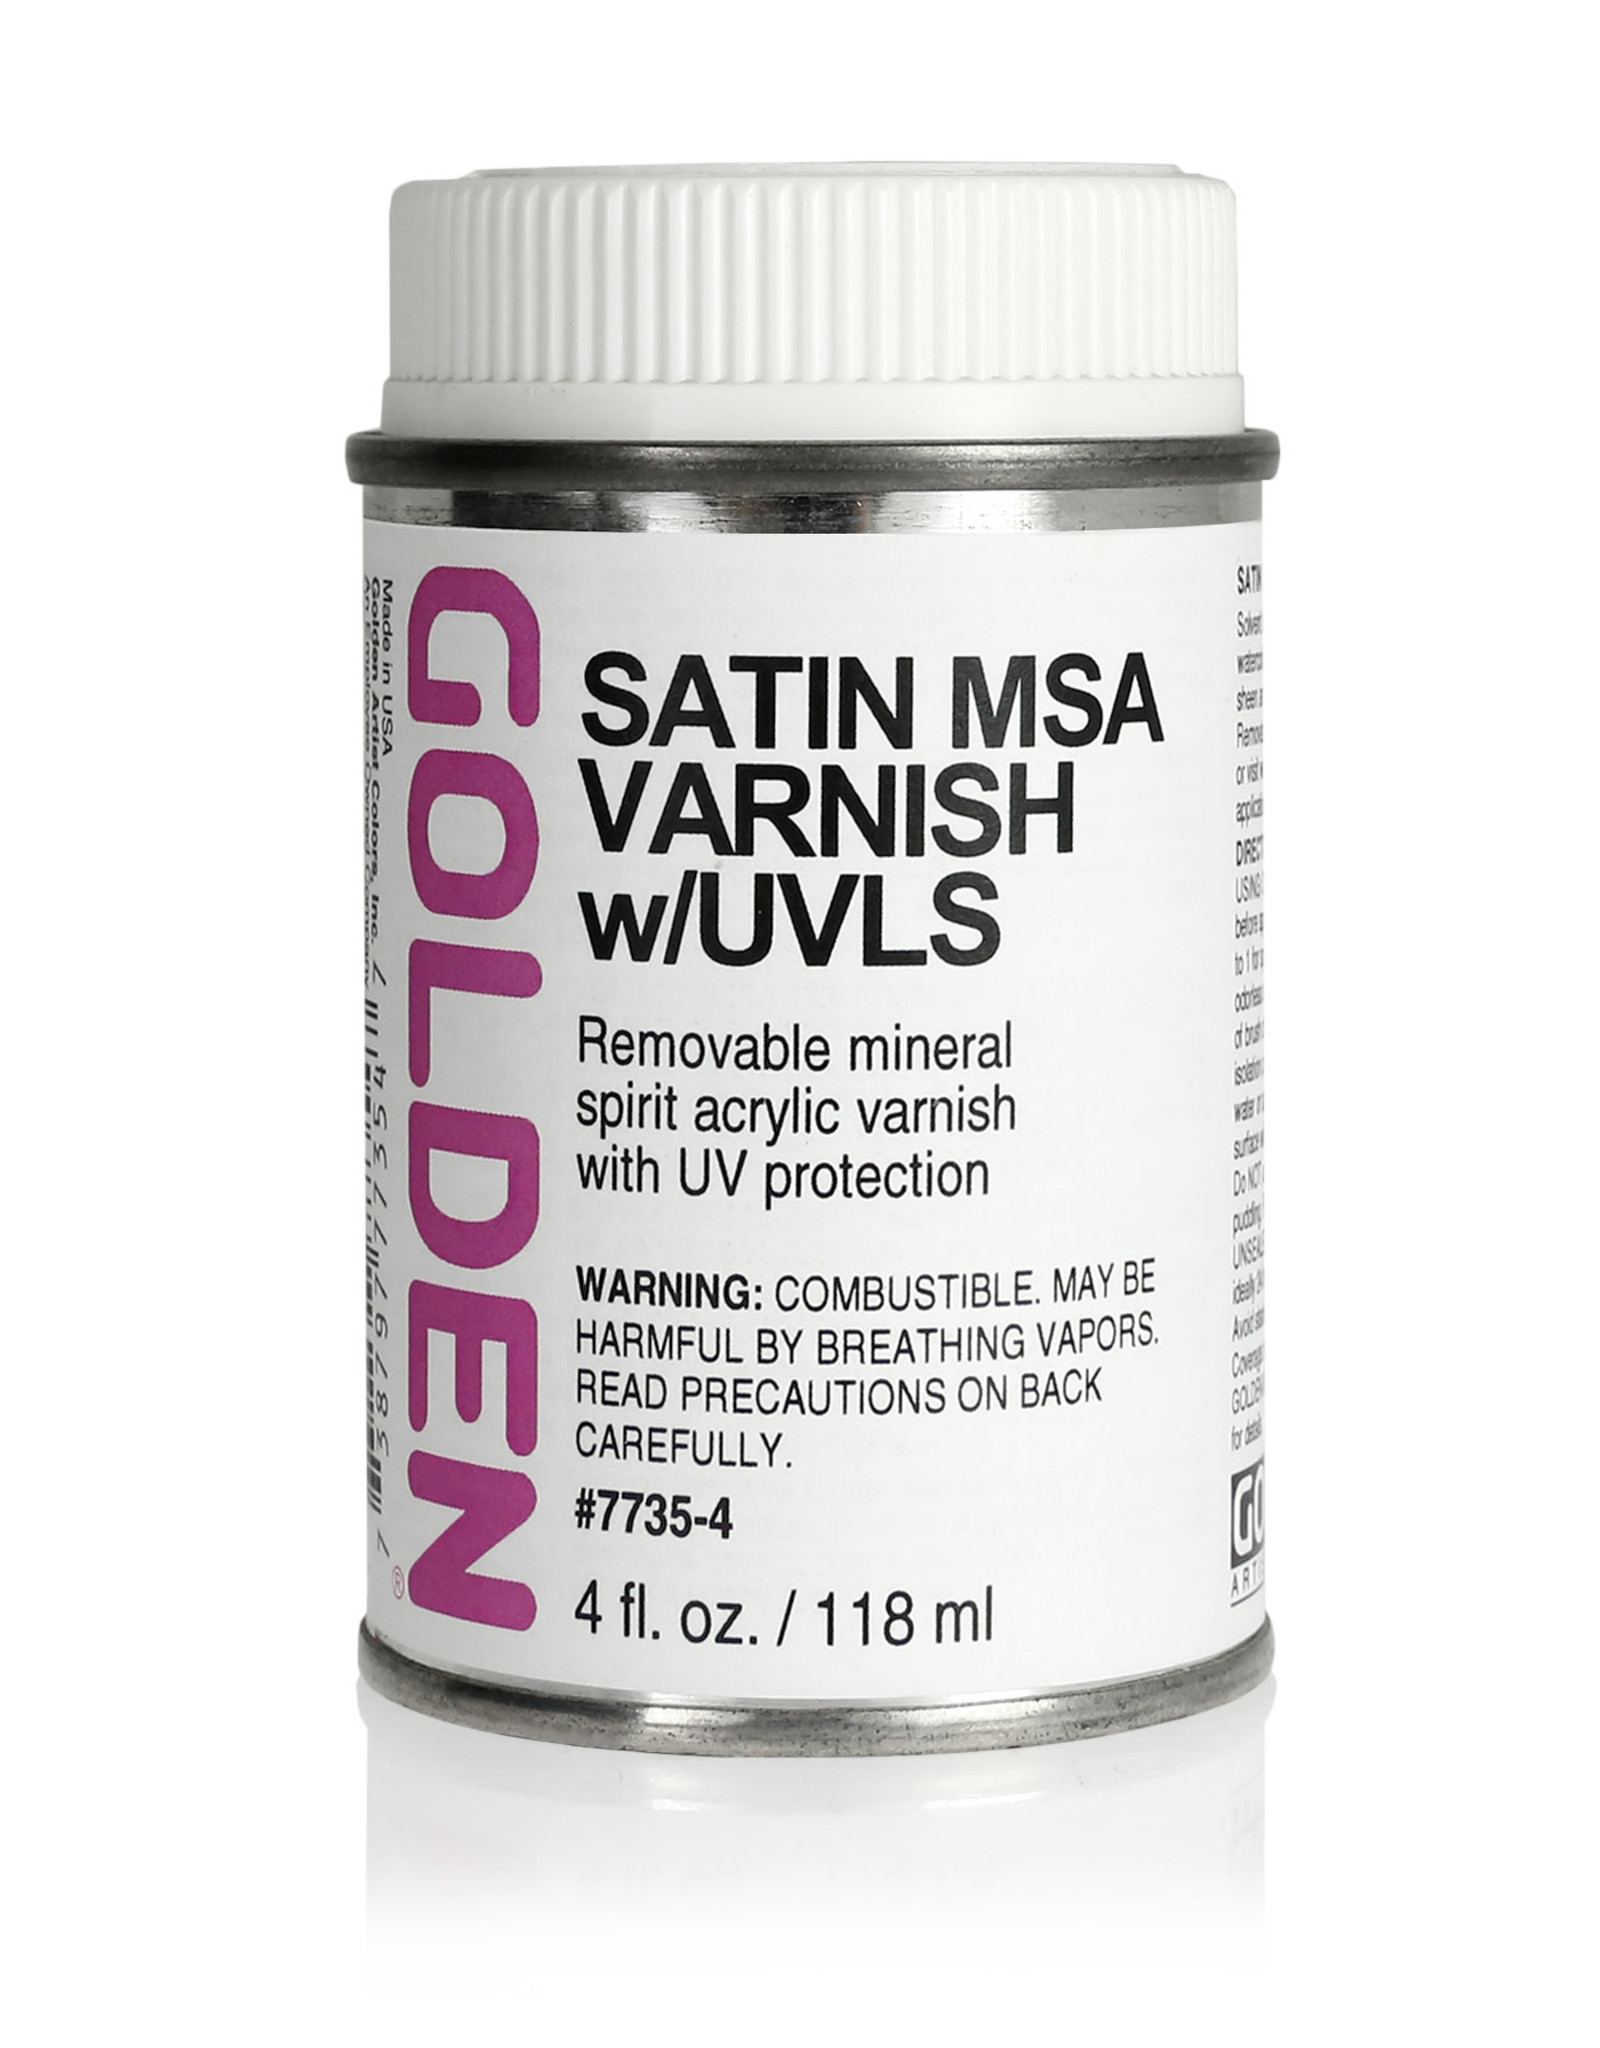 Golden Satin MSA Varnish w/UVLS 4 oz can - The Art Store/Commercial Art  Supply